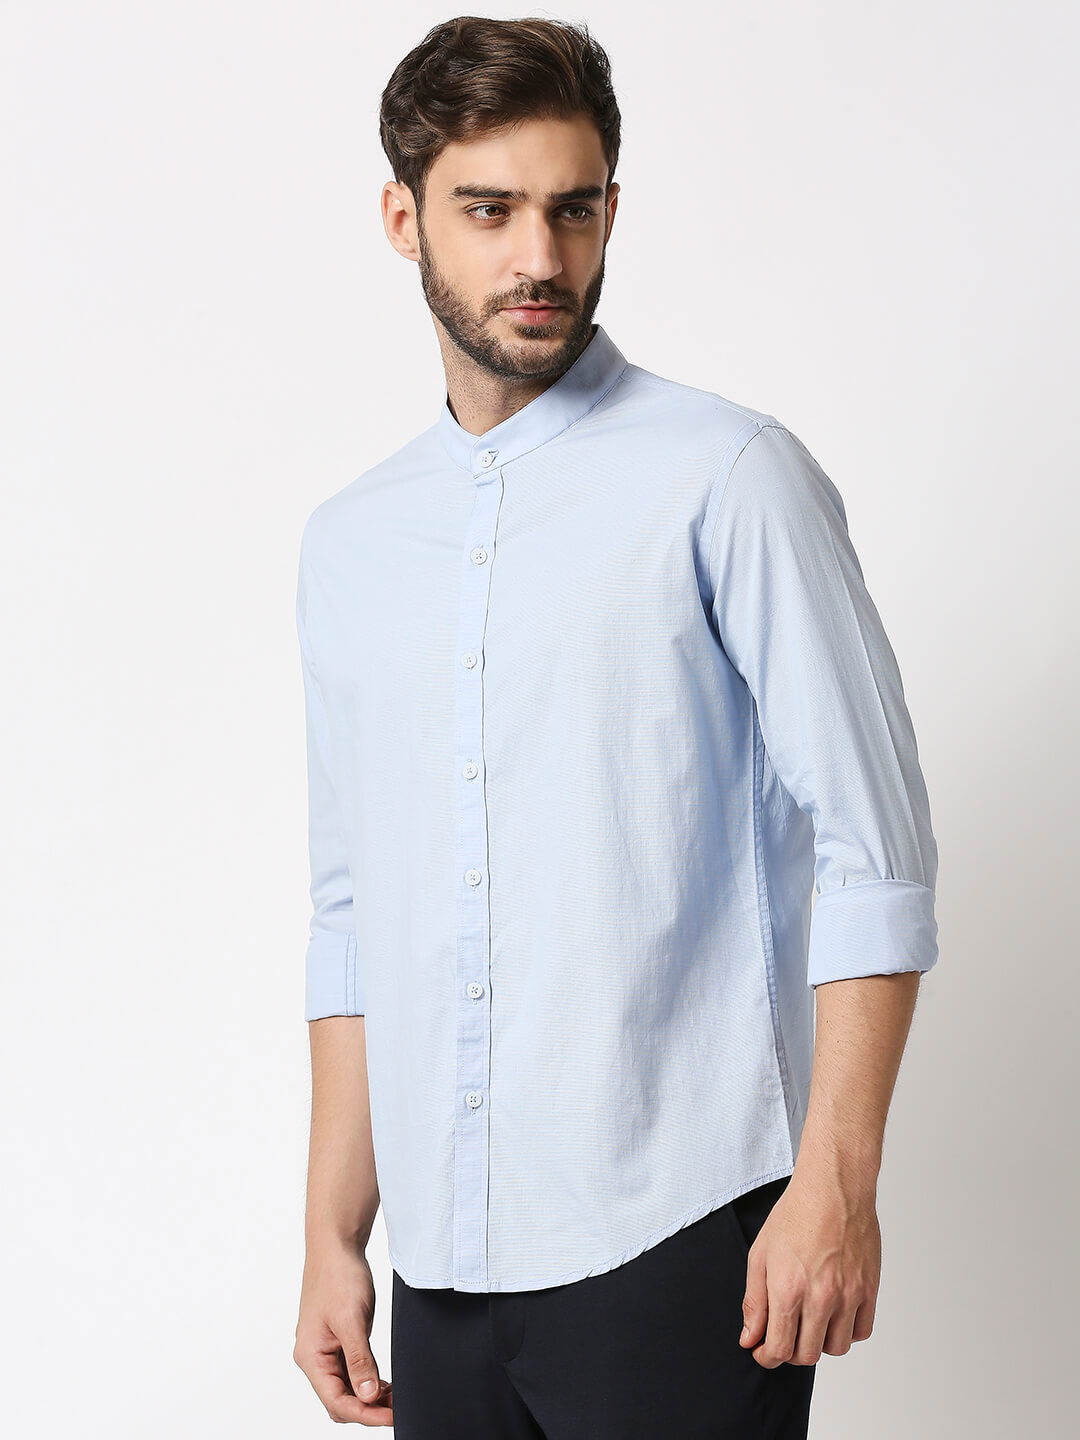 The Manaca Mandarin Collar Plain Shirt - Sky Blue